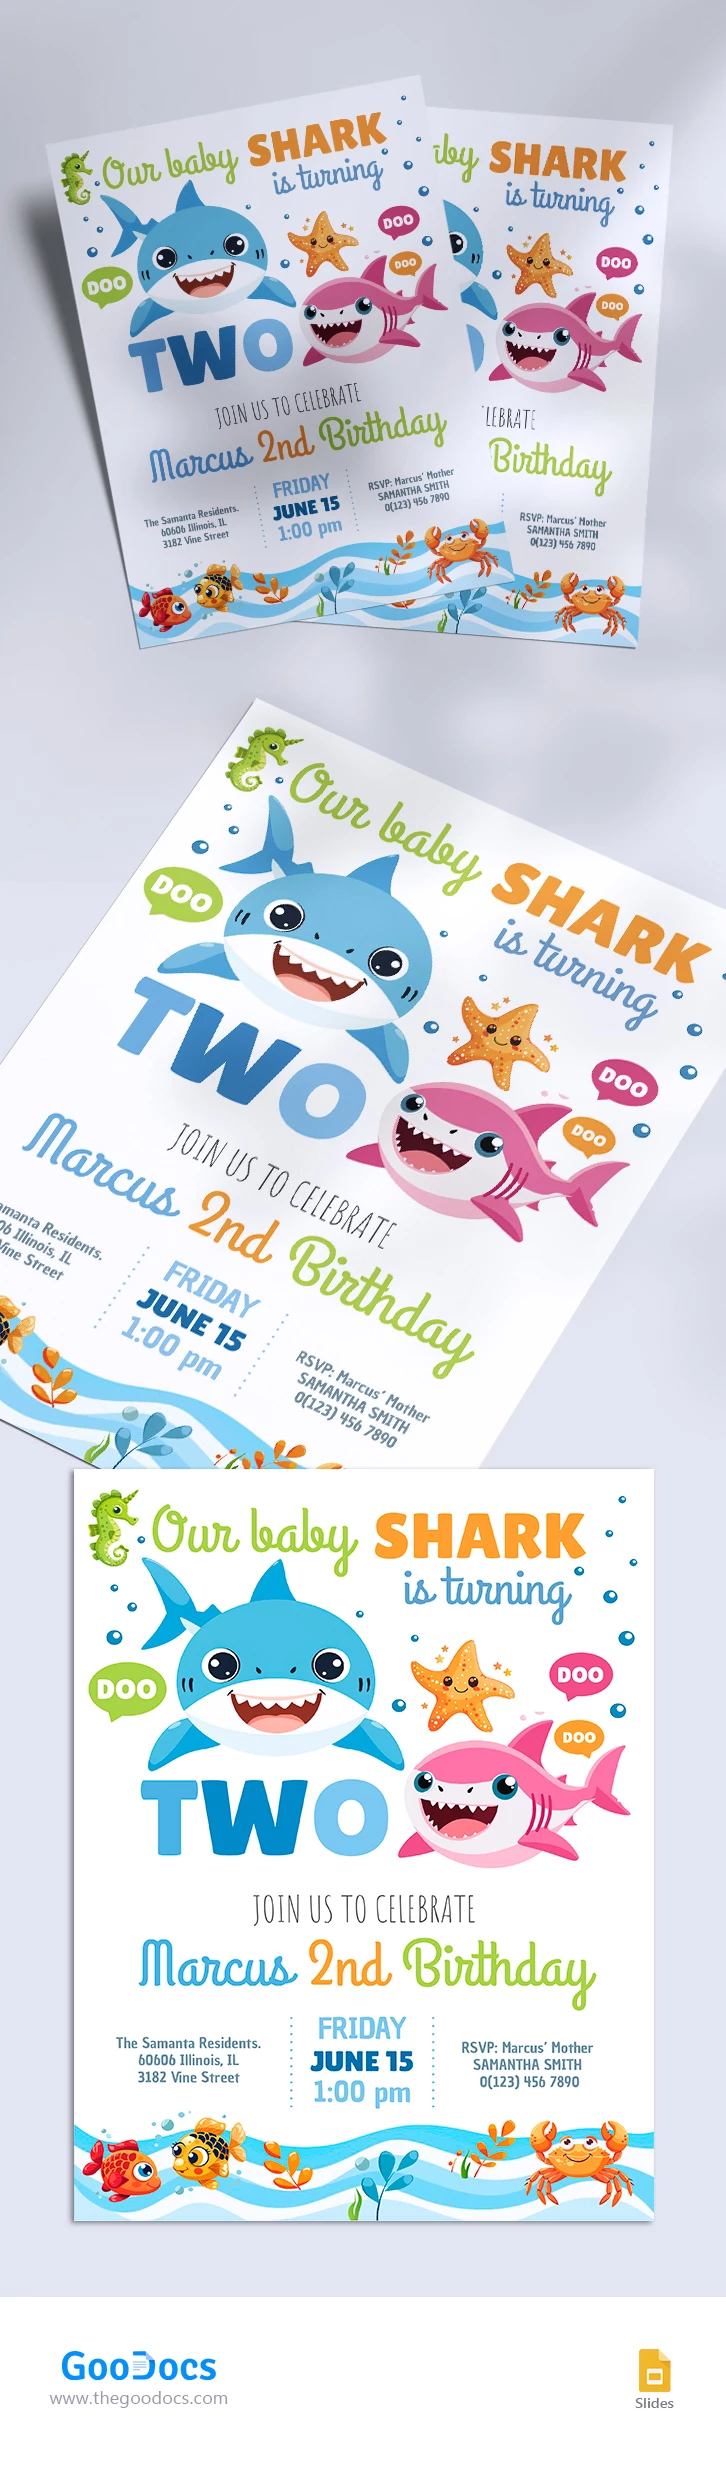 Convite Baby Shark - free Google Docs Template - 10068413